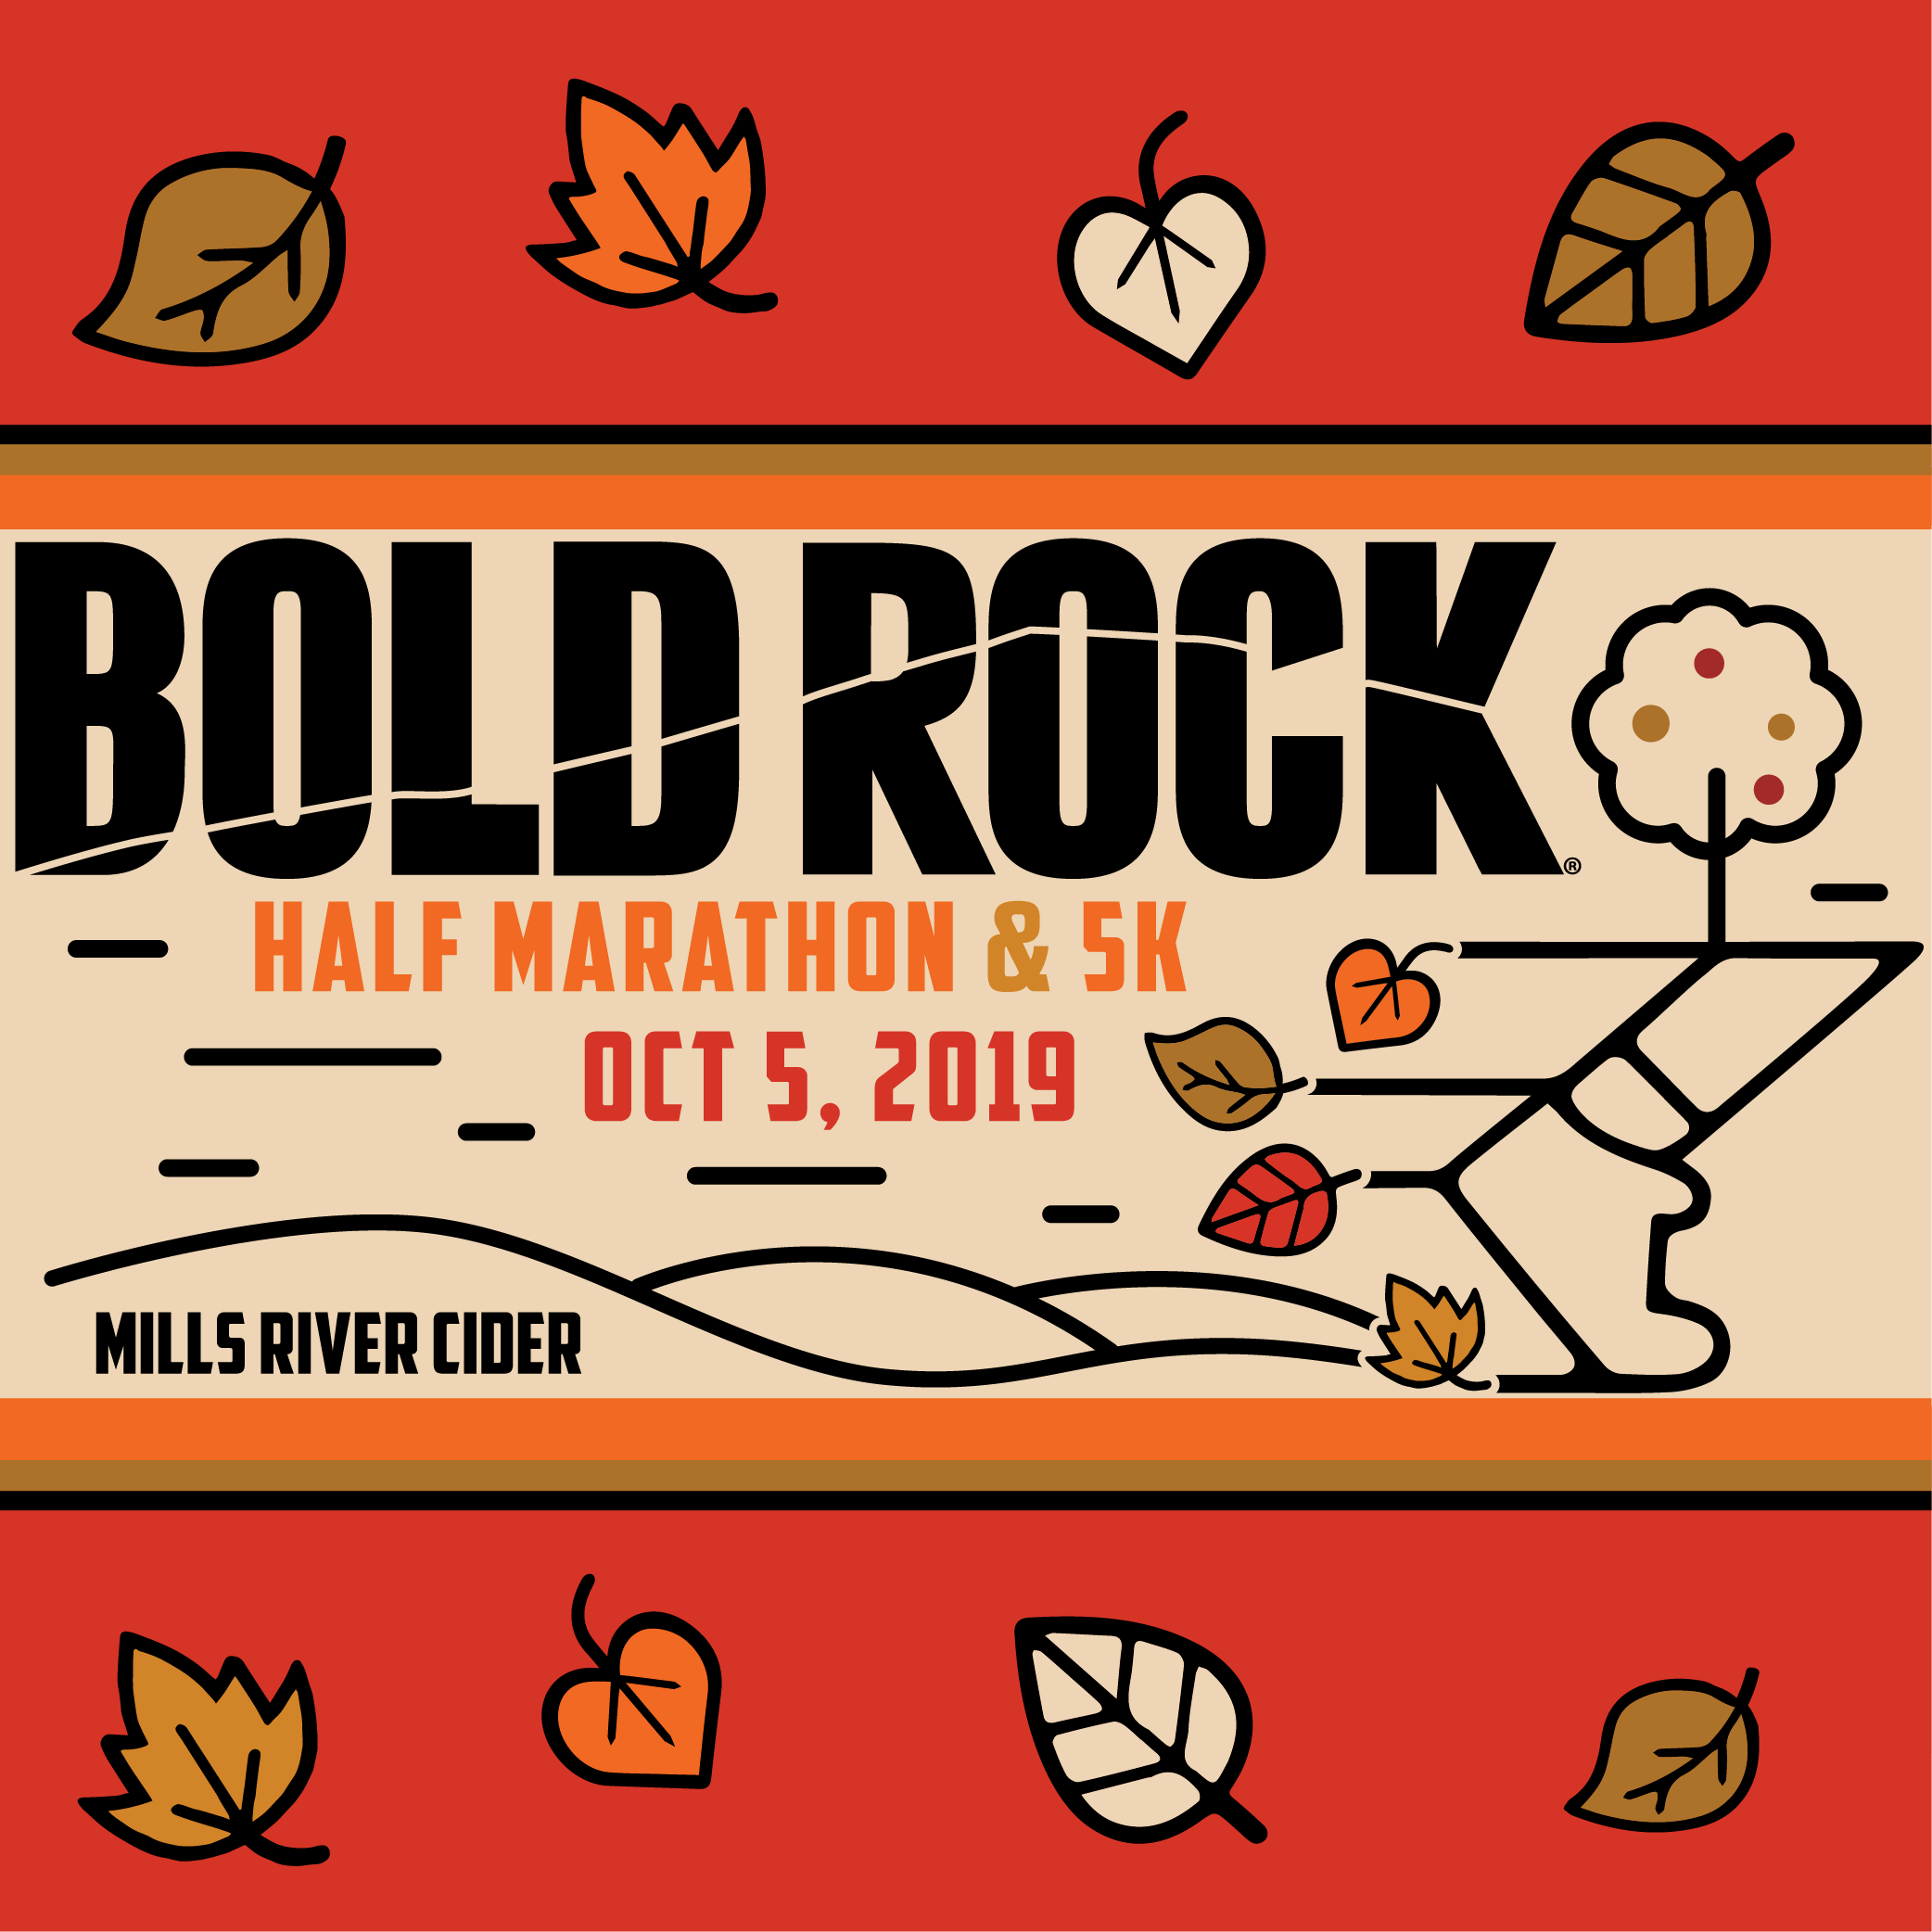 Bold Rock Half Marathon & 5K logo on RaceRaves